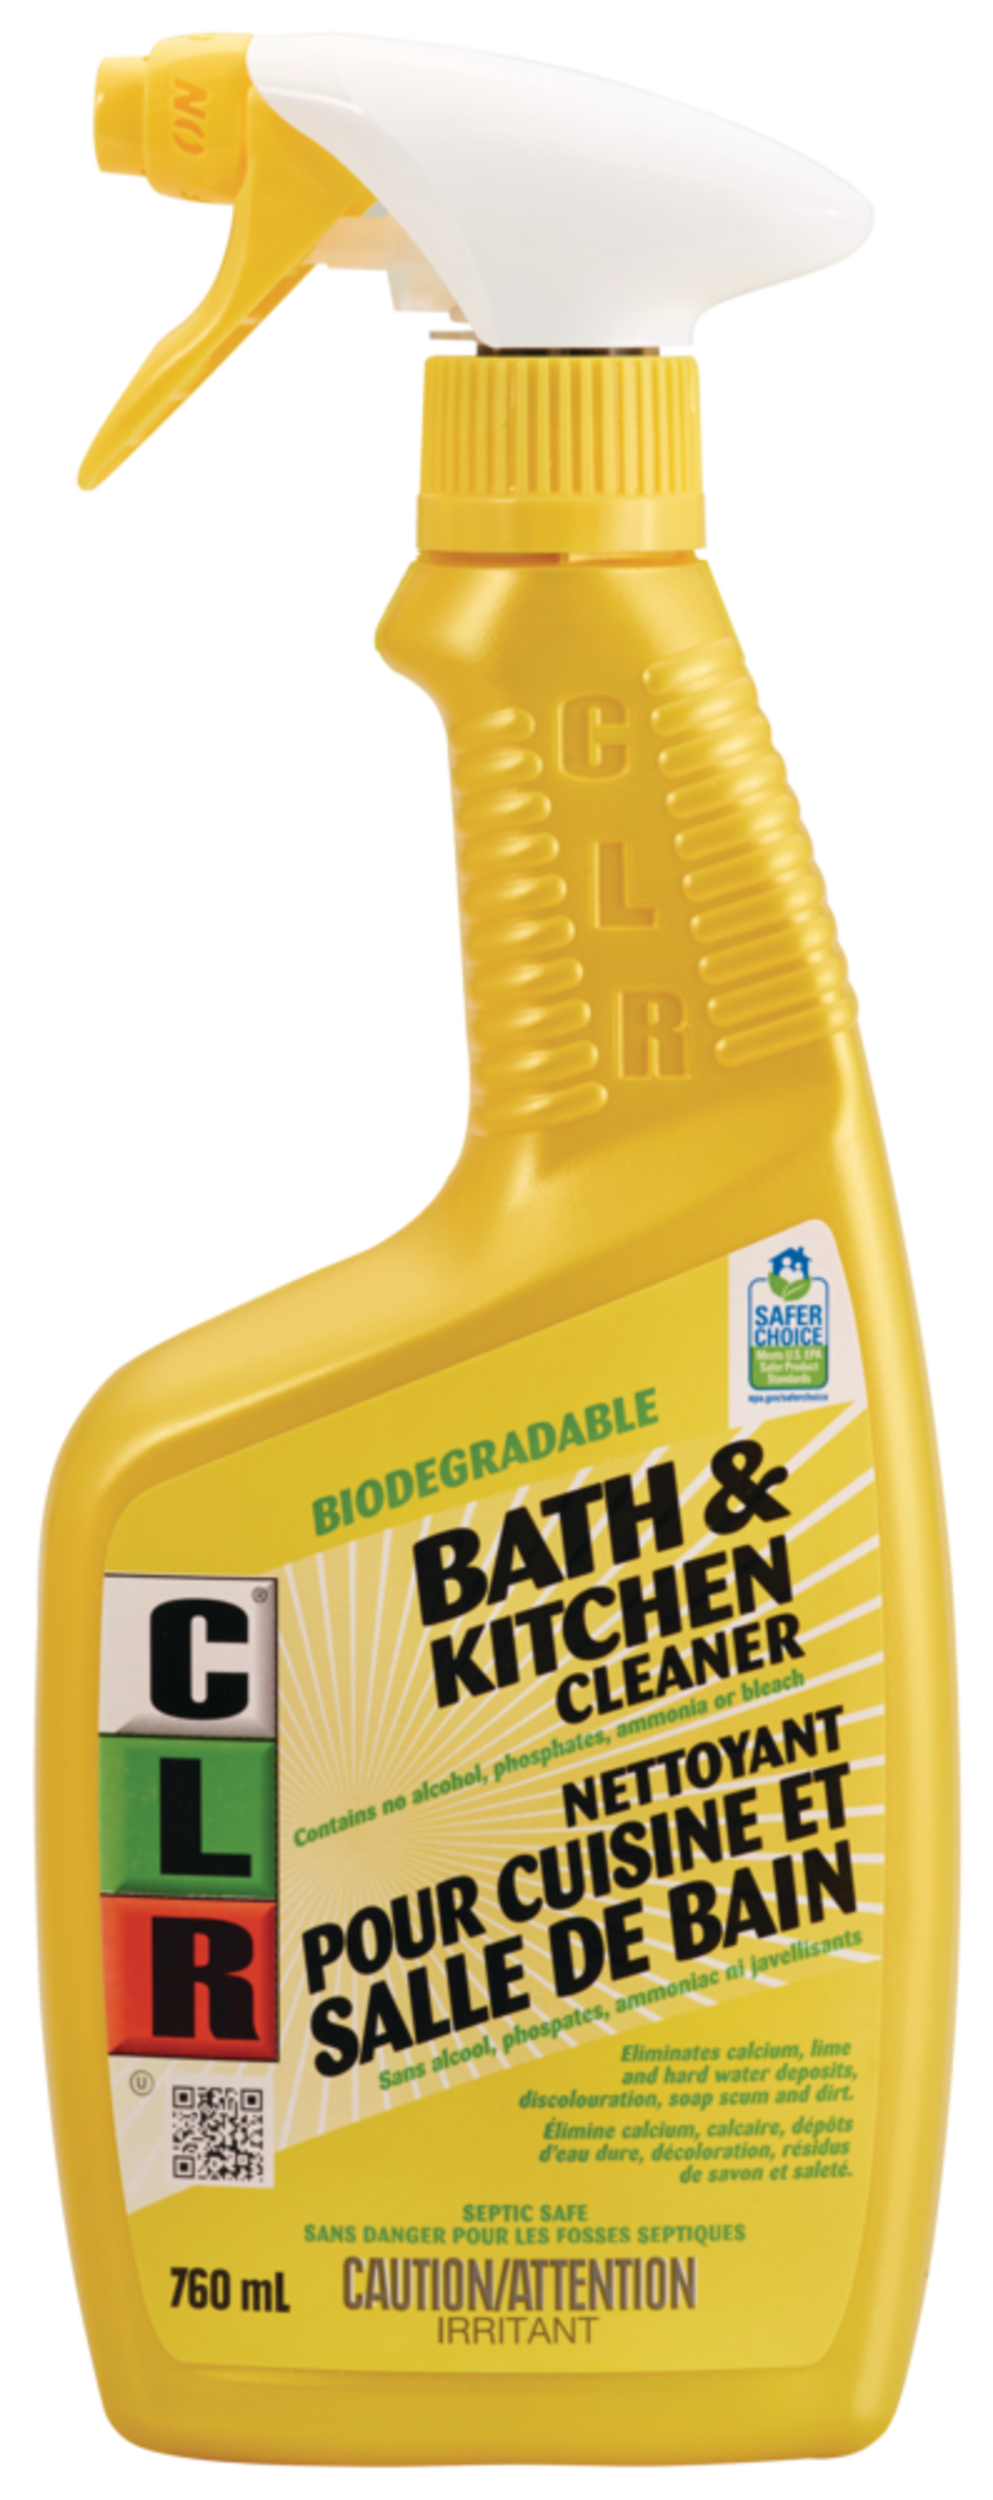 Clr Cleaner 760ml Bath Kitchen 83c9e9ec D88e 4a44 8a40 43e1b51b9df8 ?imdensity=1&imwidth=640&impolicy=gZoom